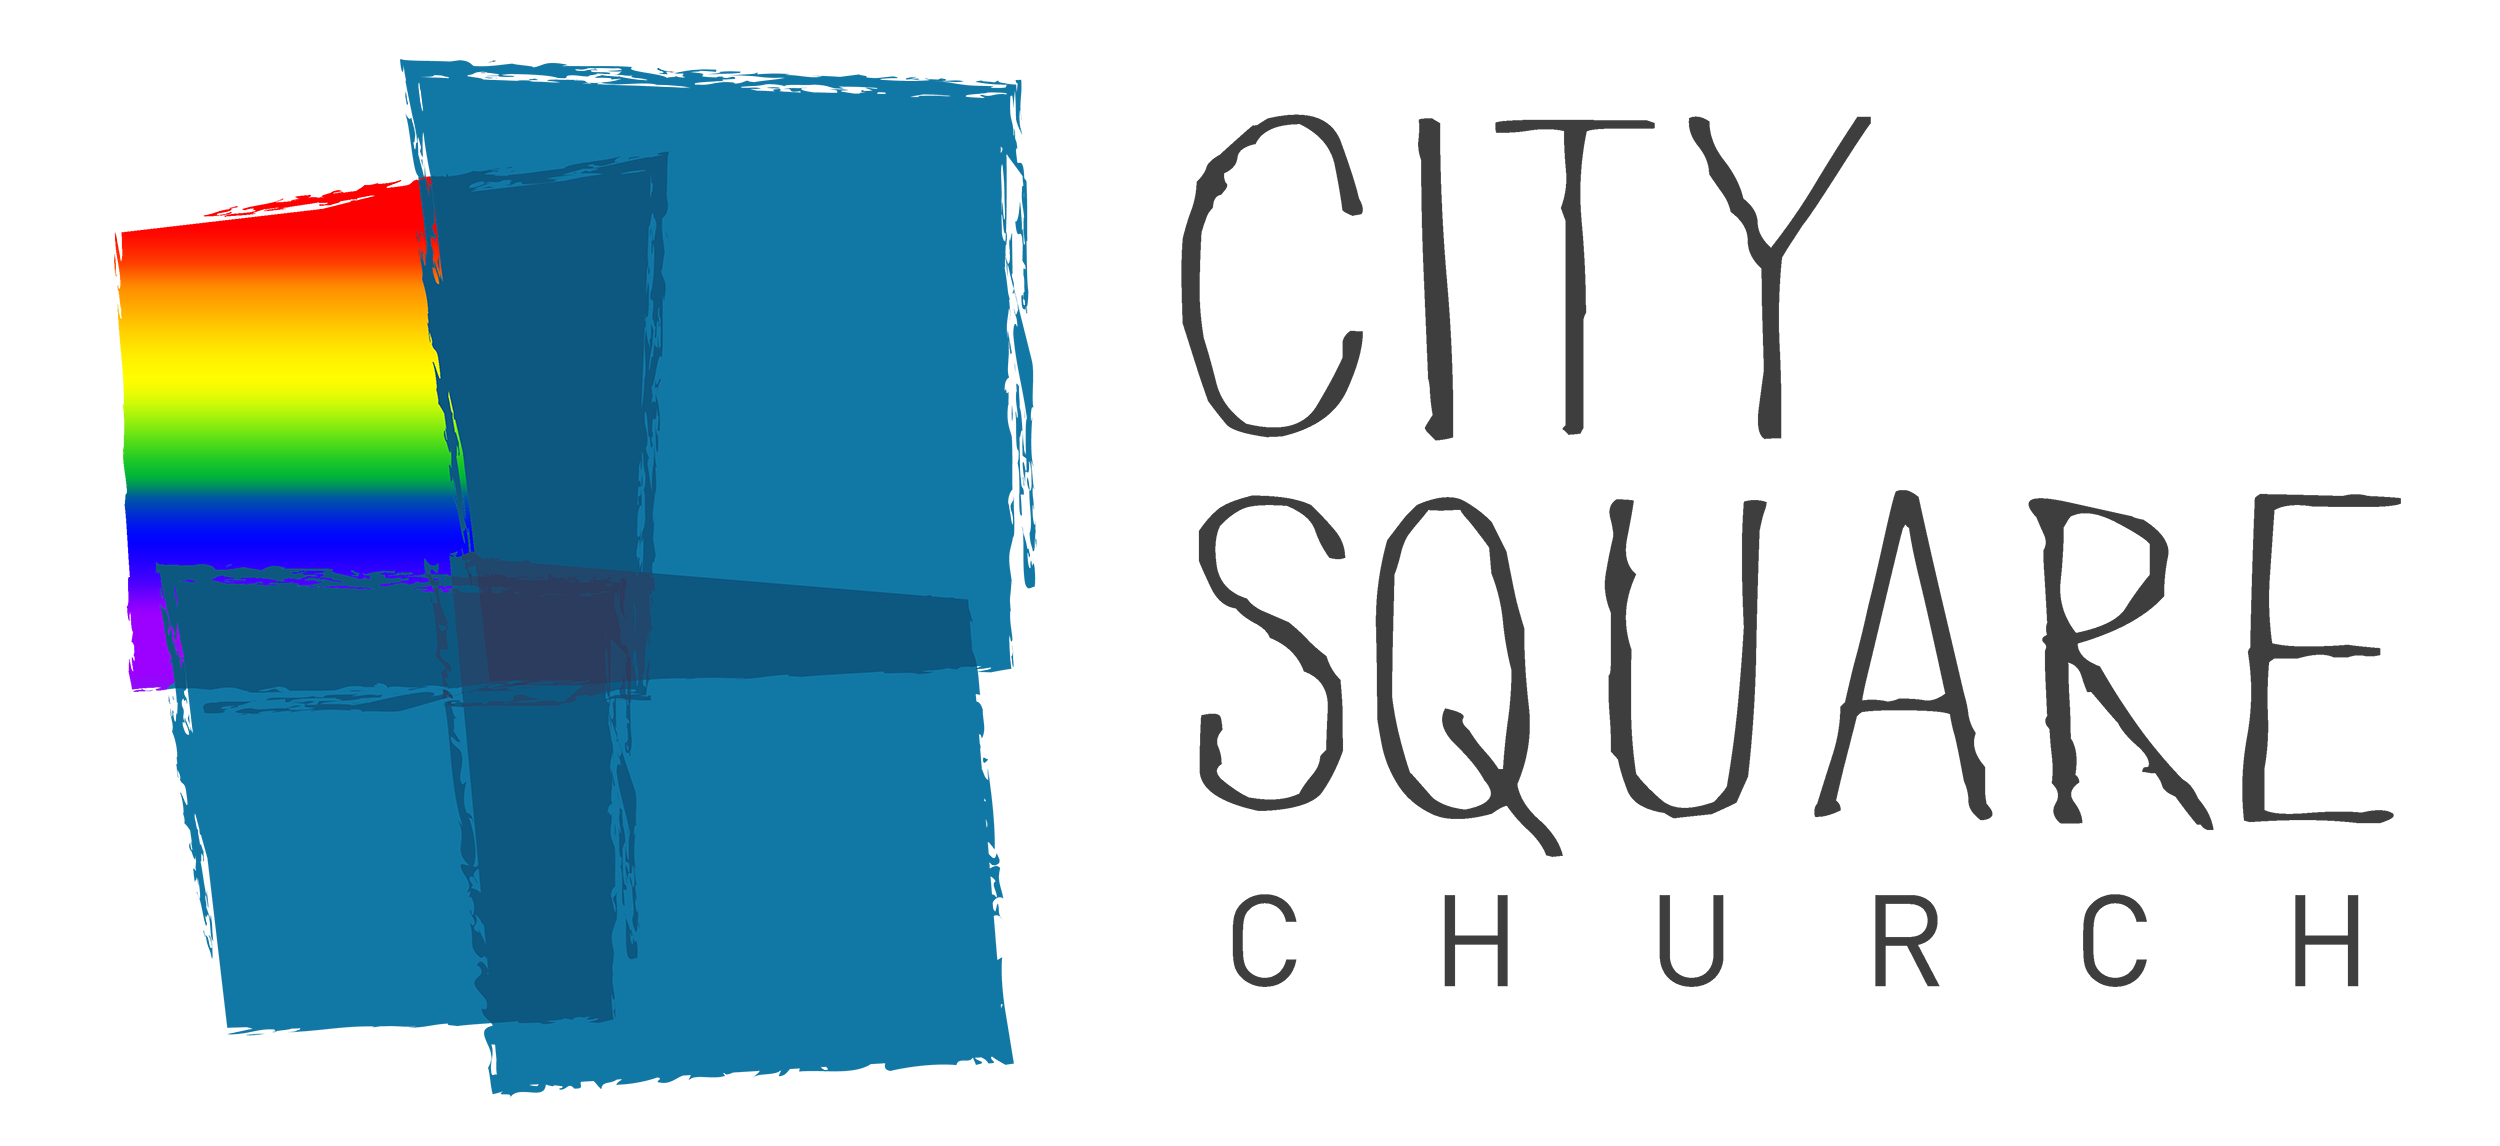 City Square Church